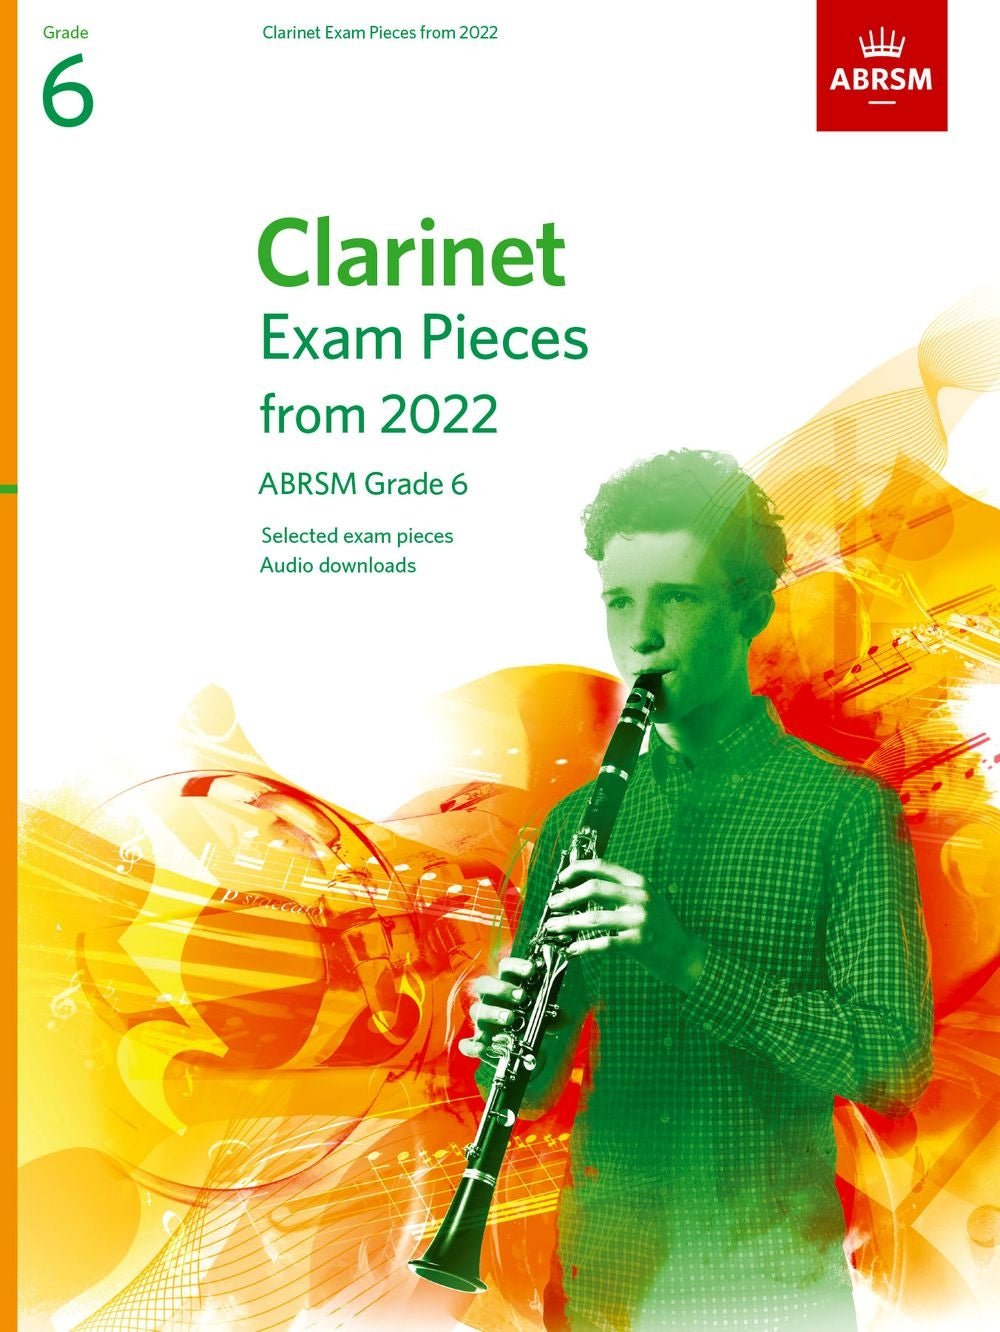 ABRSM Clarinet Exam Pces Gr 6 22-